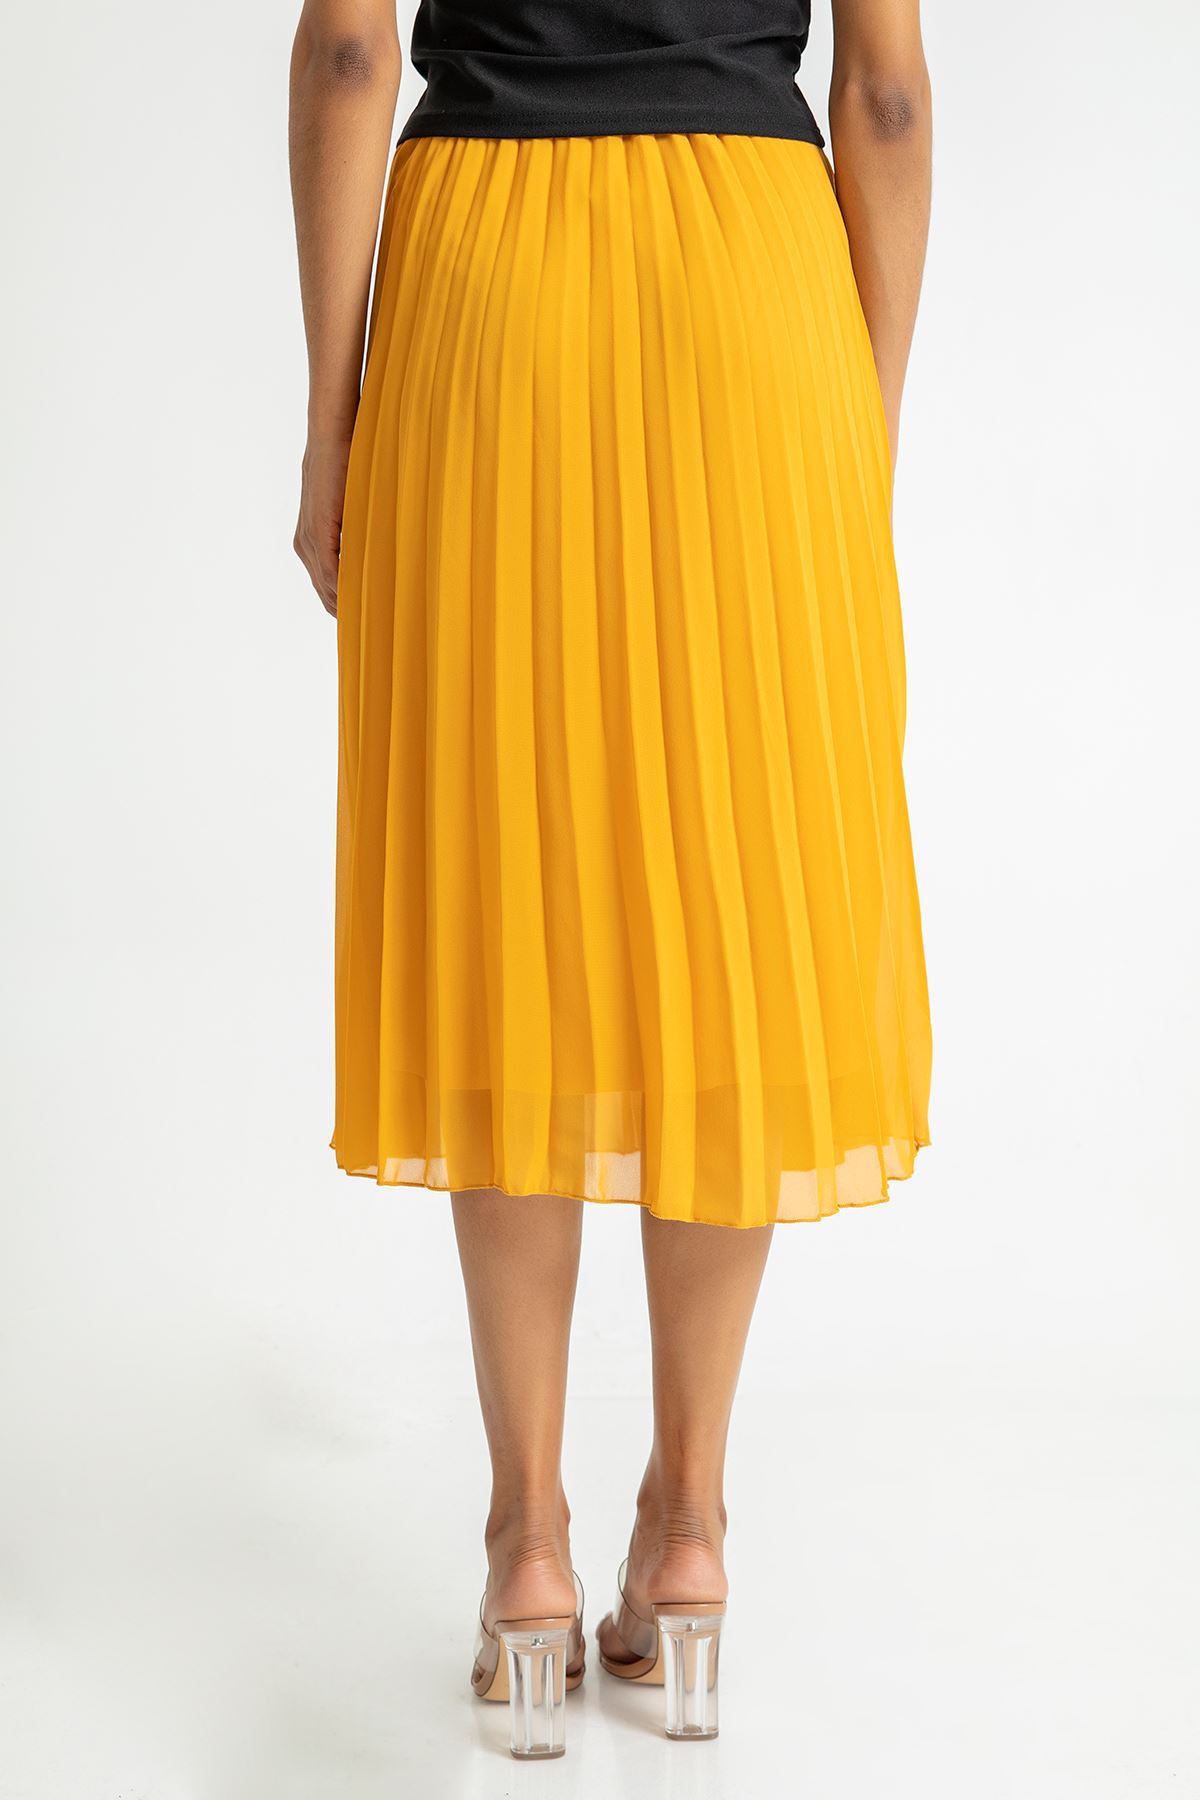 Chiffon Fabric Midi Comfy Fit Pleated Women'S Skirt - Mustard